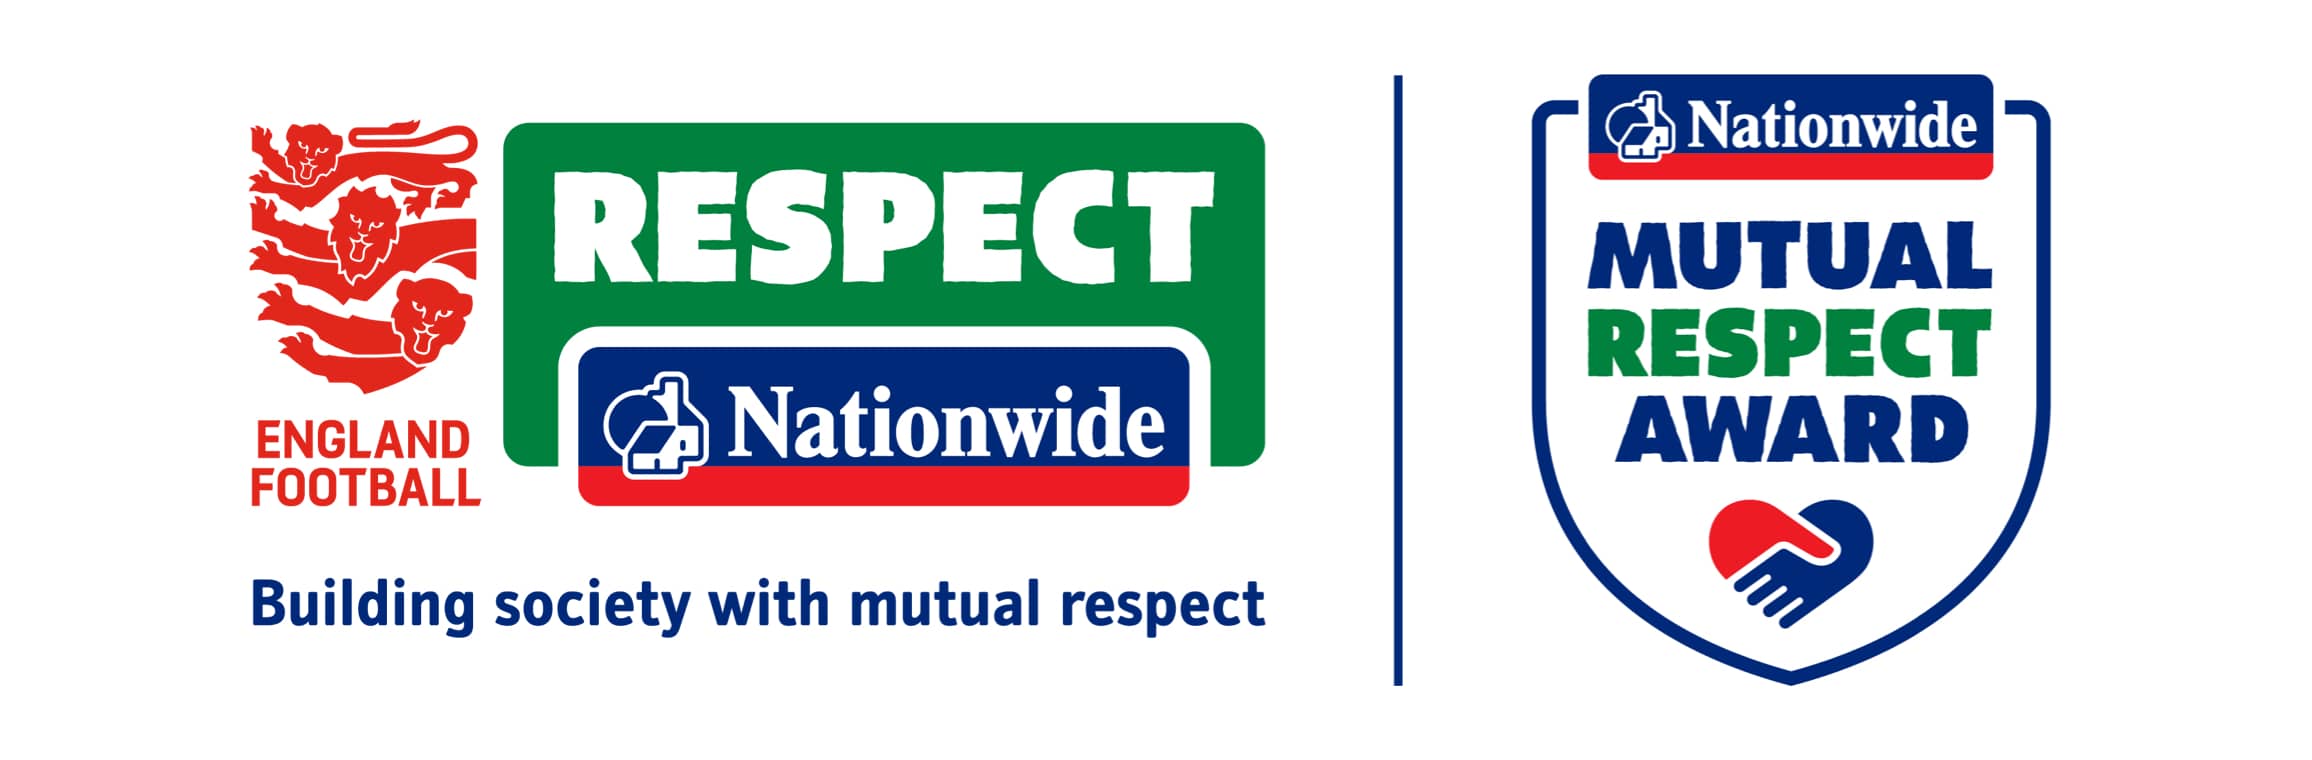 Mutual Respect Award Nationwide